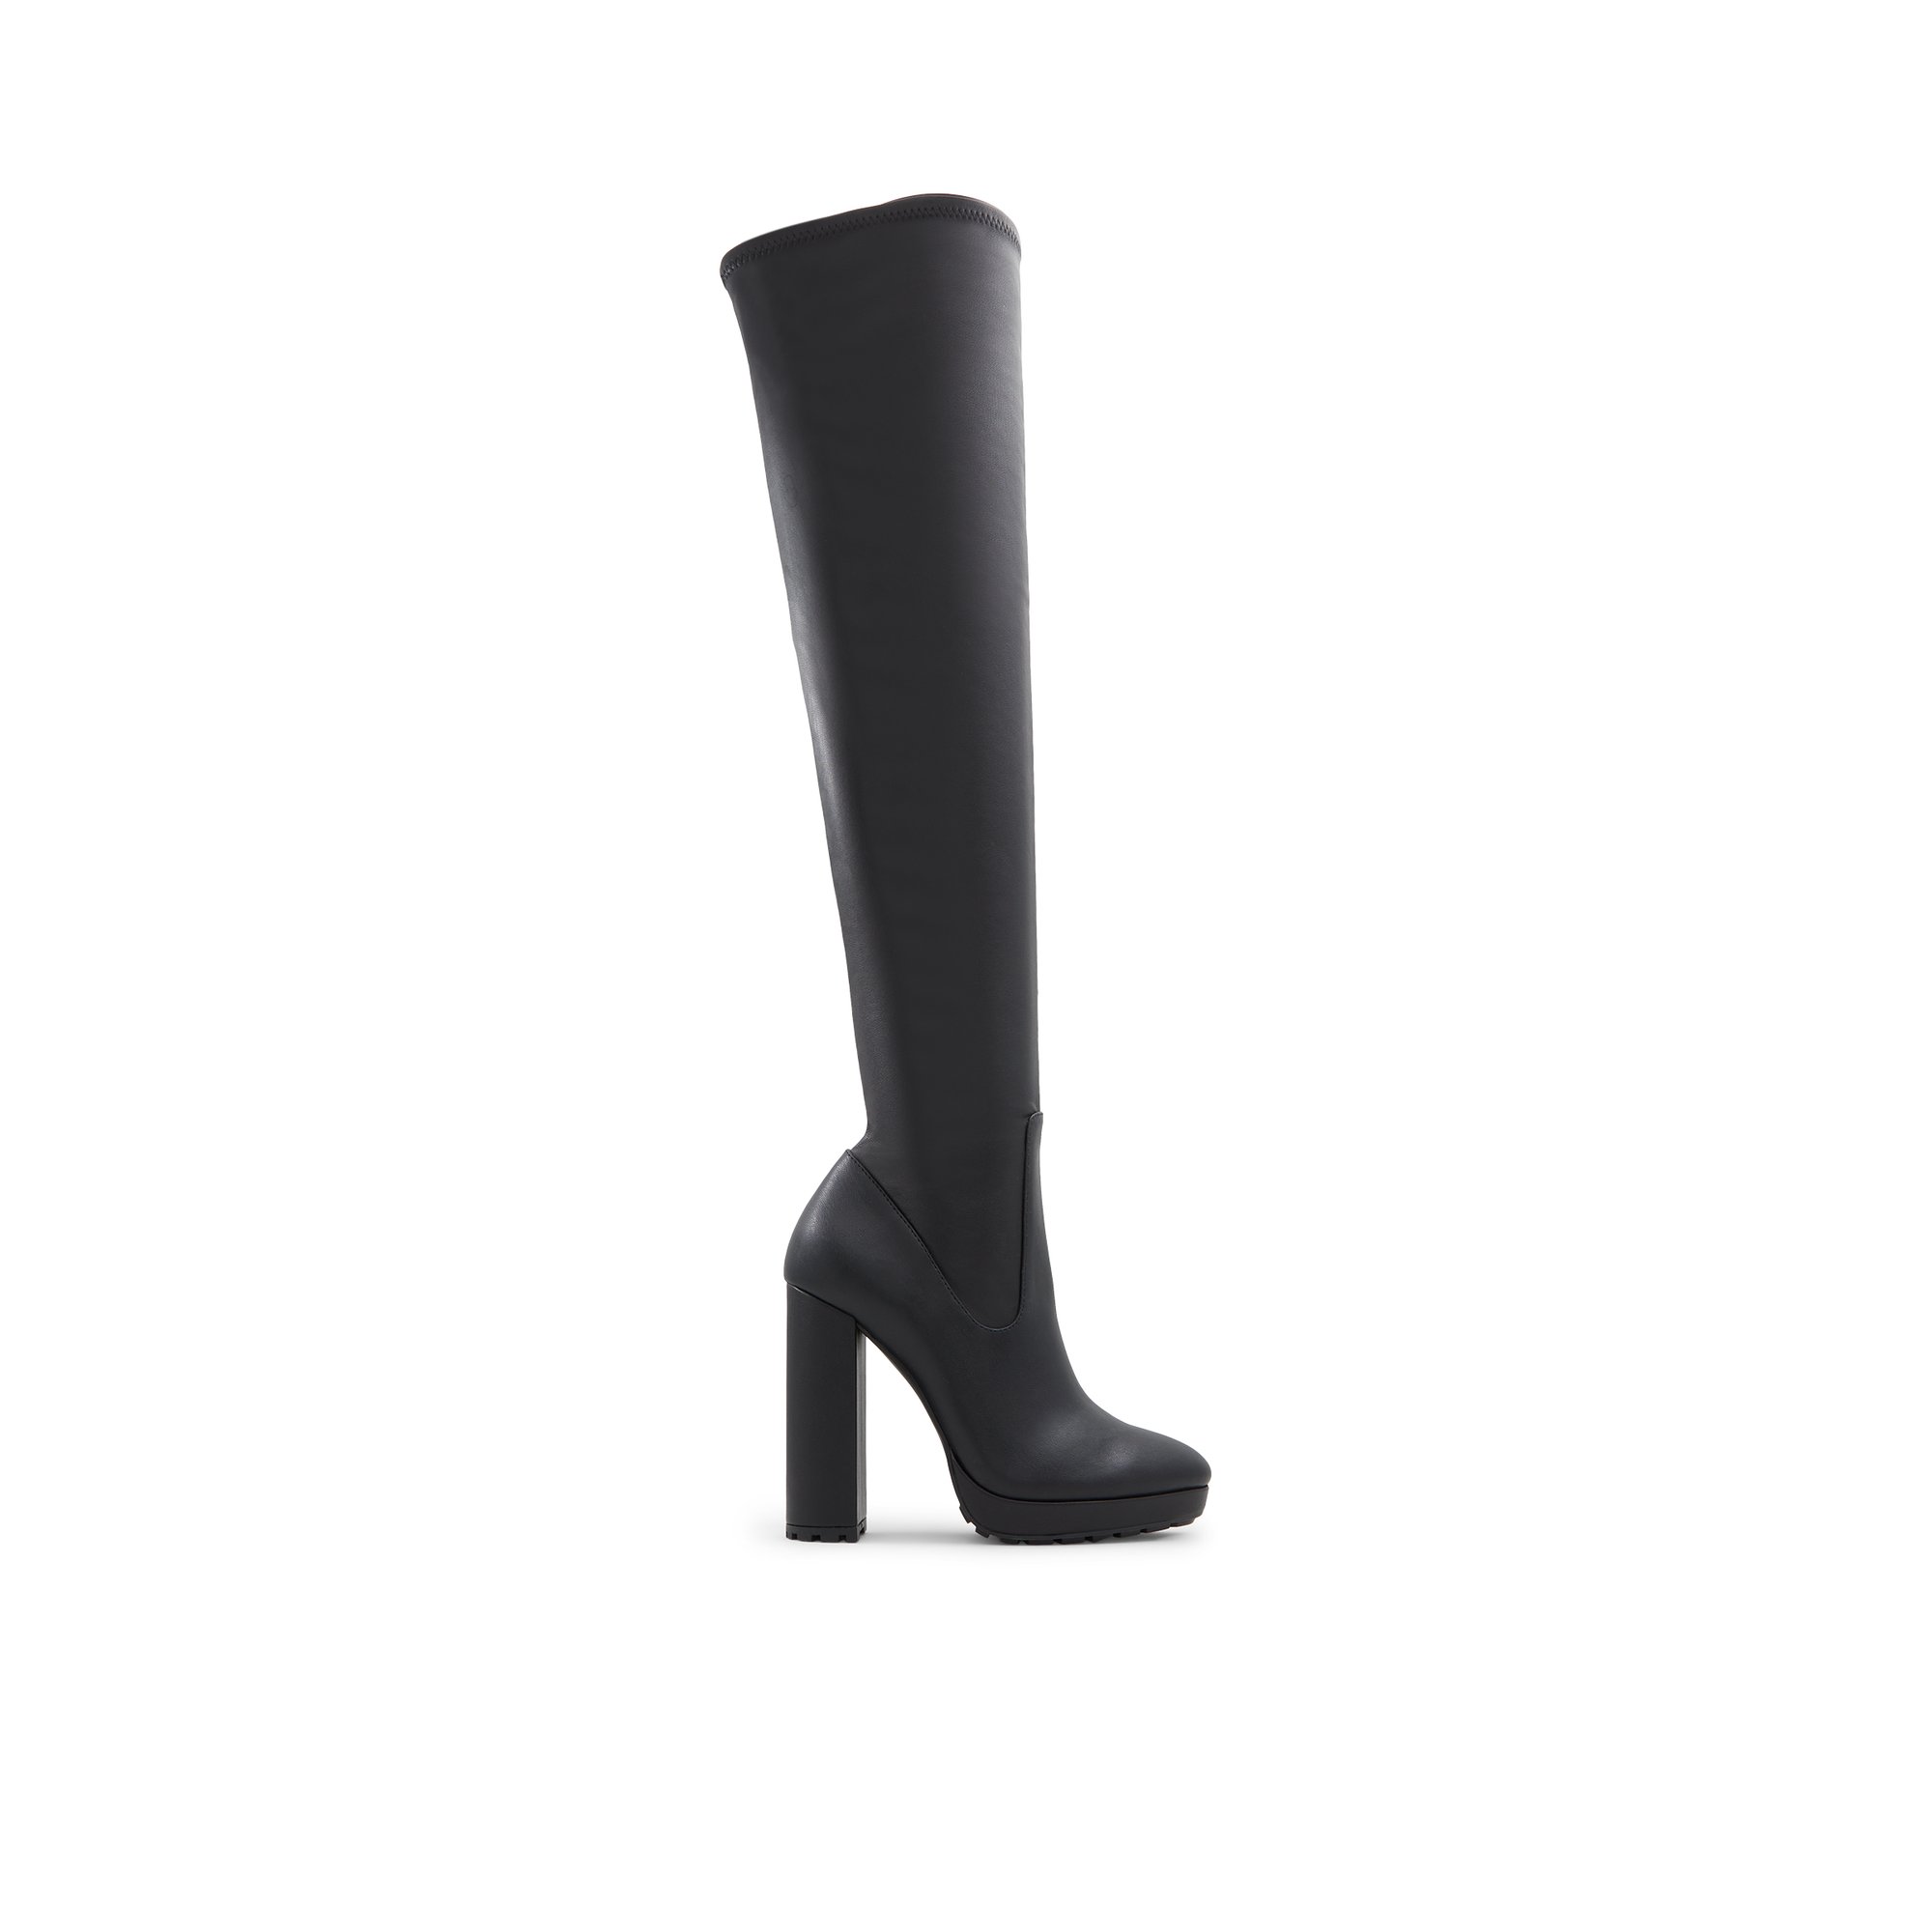 ALDO Dallobrelia - Women's Boots Dress - Black